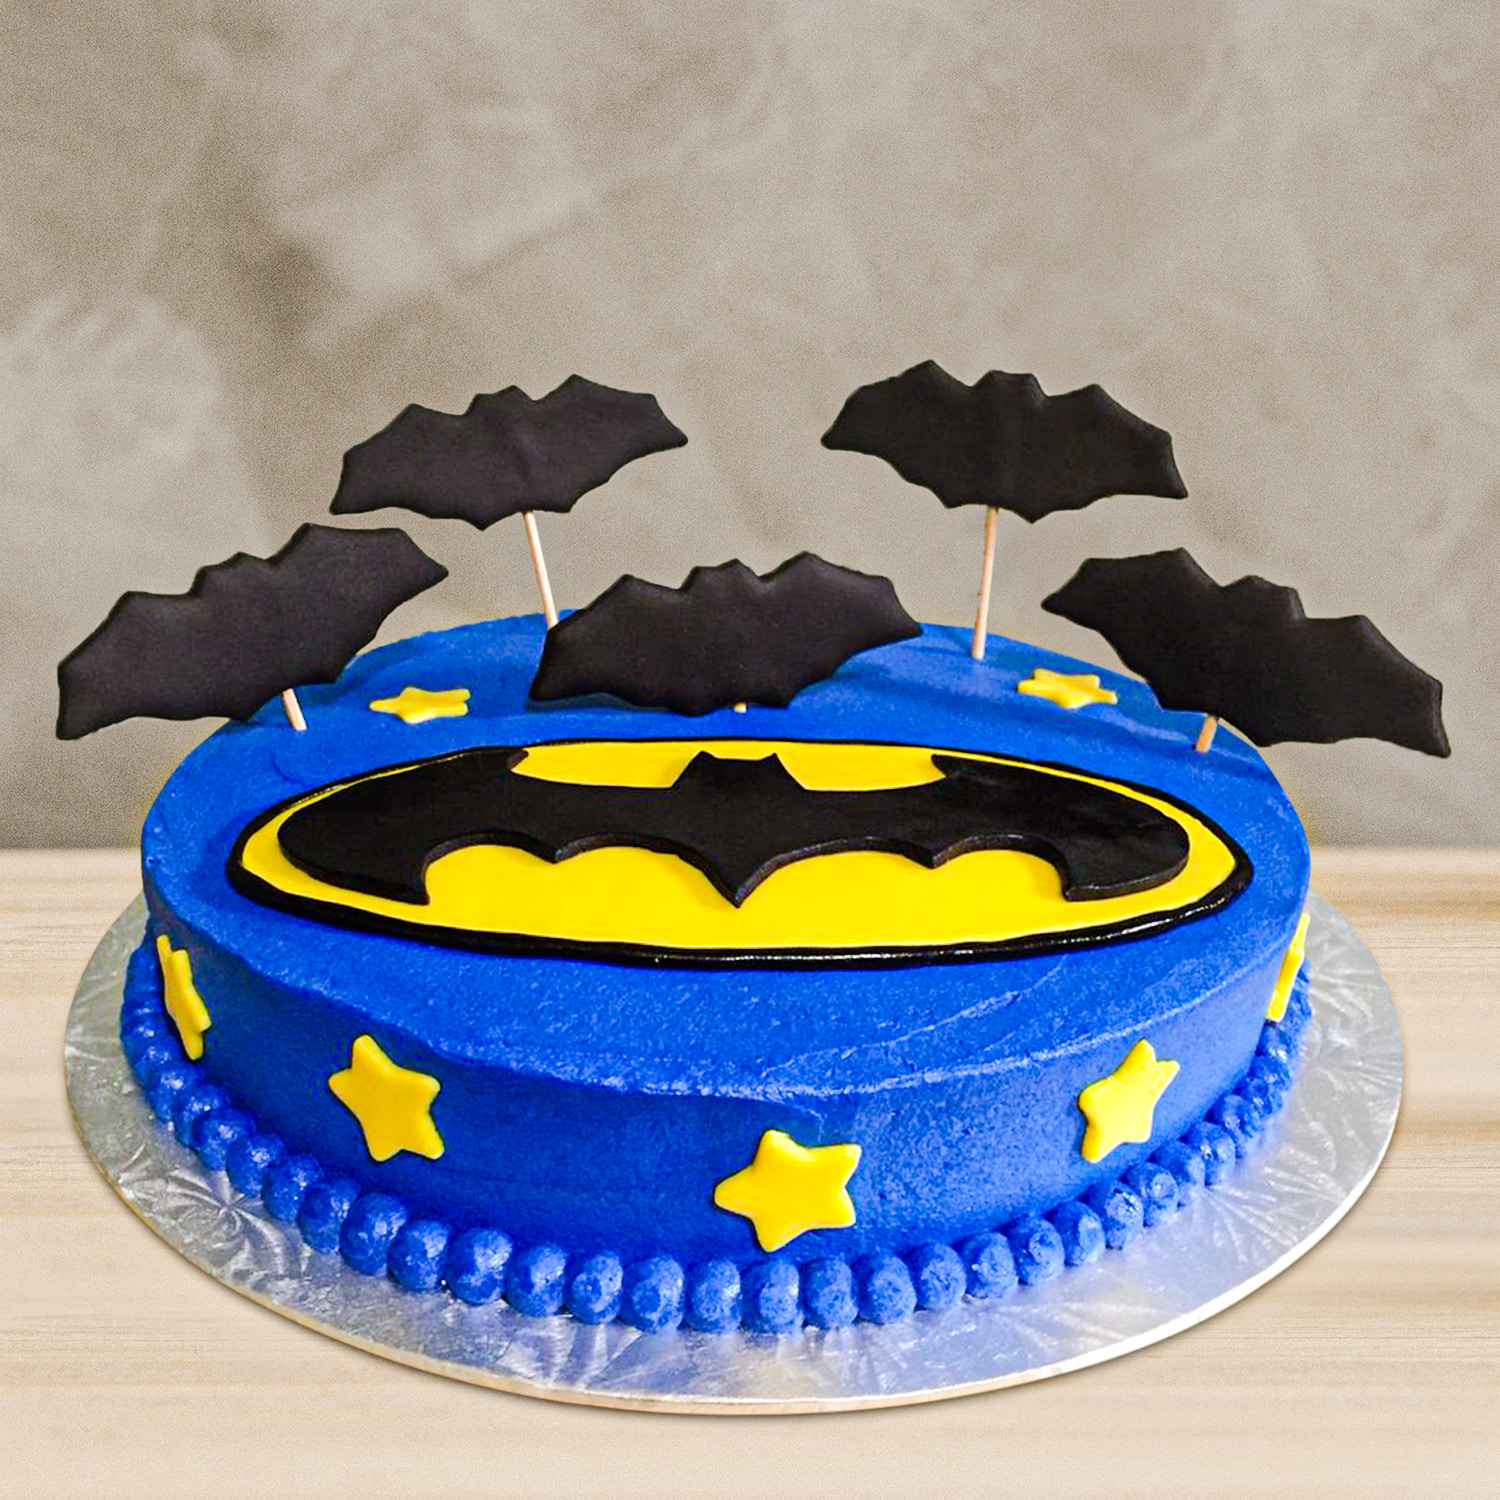 Personalised Birthday Cake Topper With Batman Mask - Etsy New Zealand